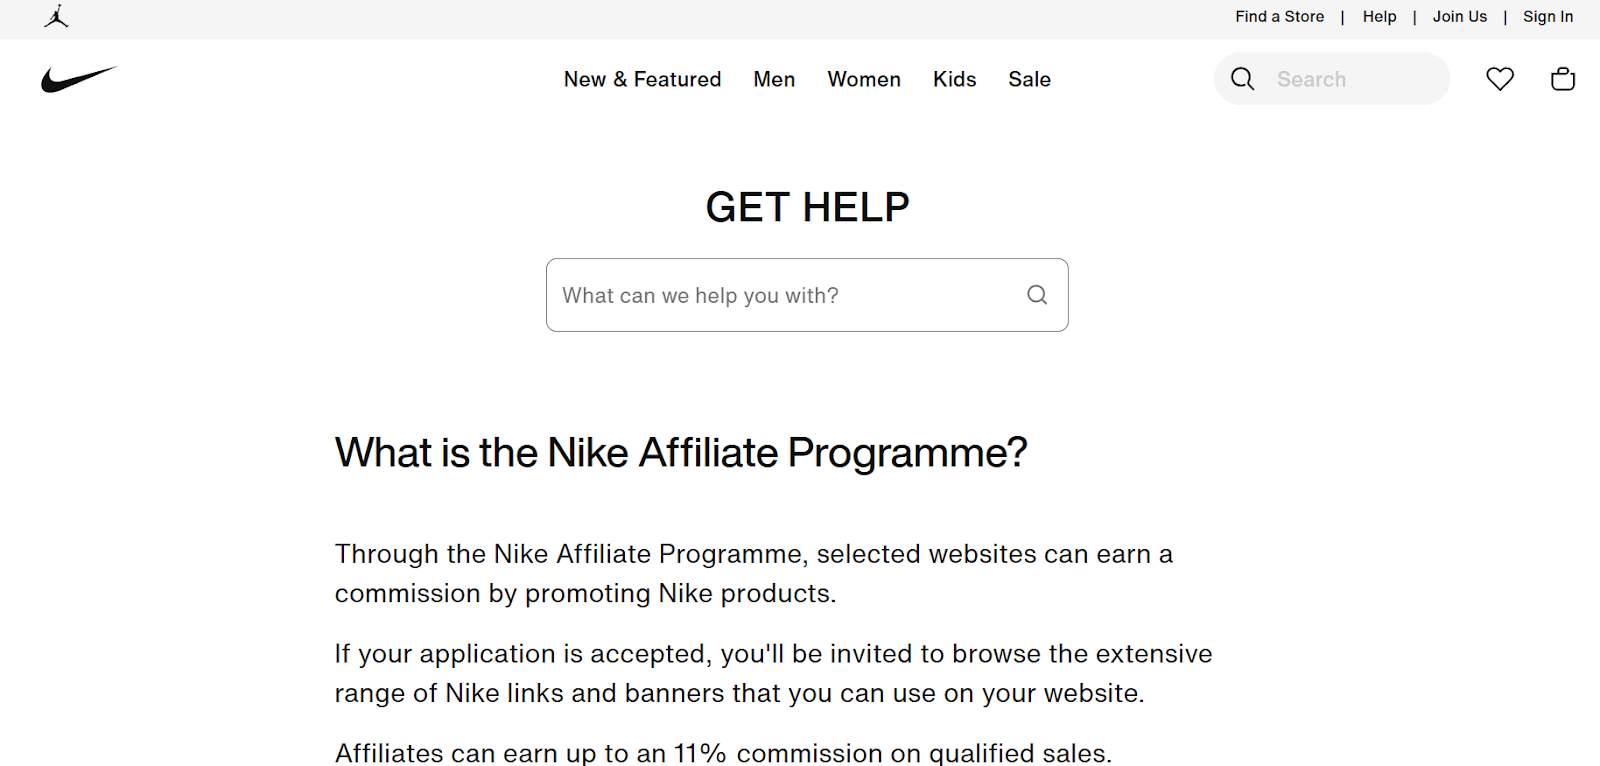 Nike Affiliate Program